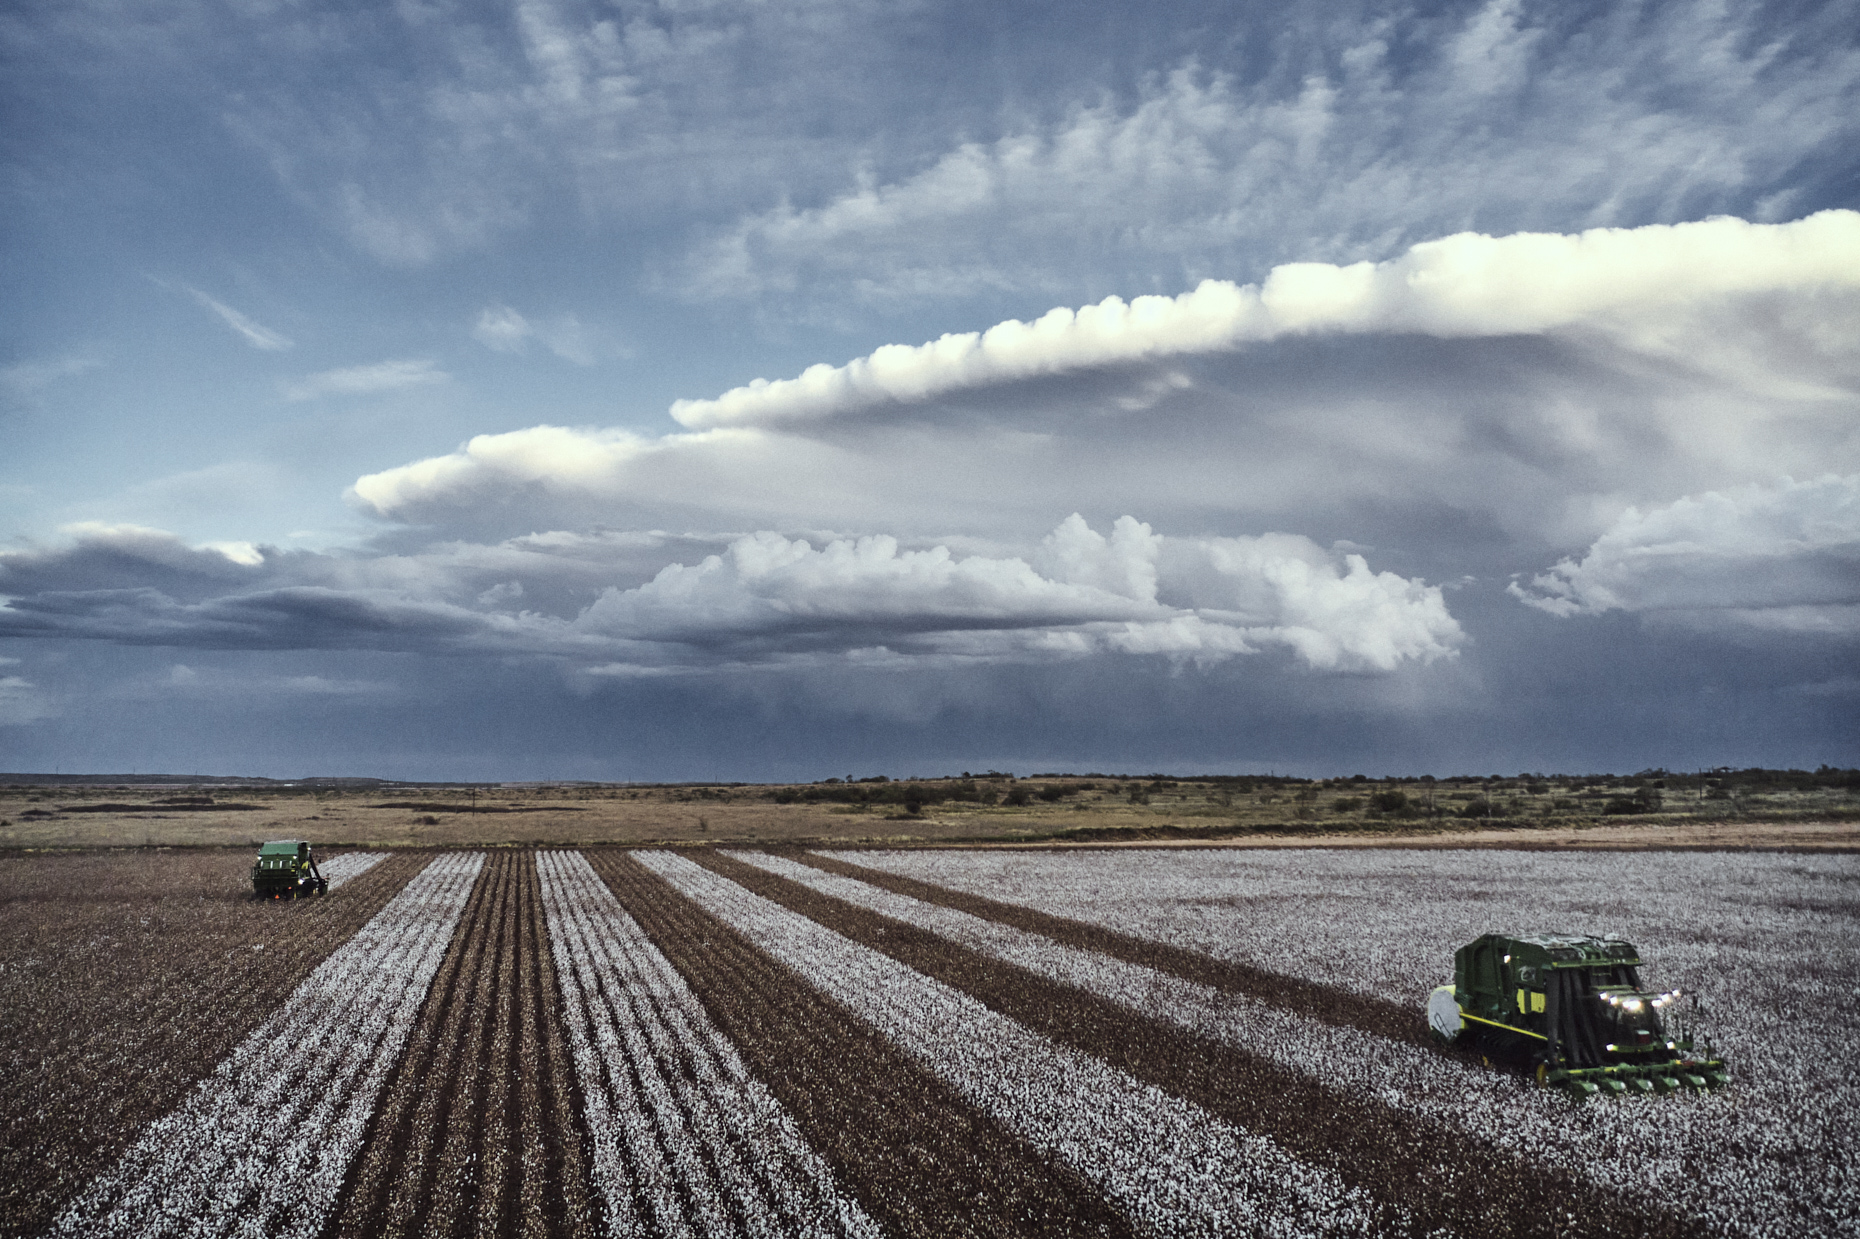 Deltapine | Agriculture Cotton Harvest | Michael Kunde Photo